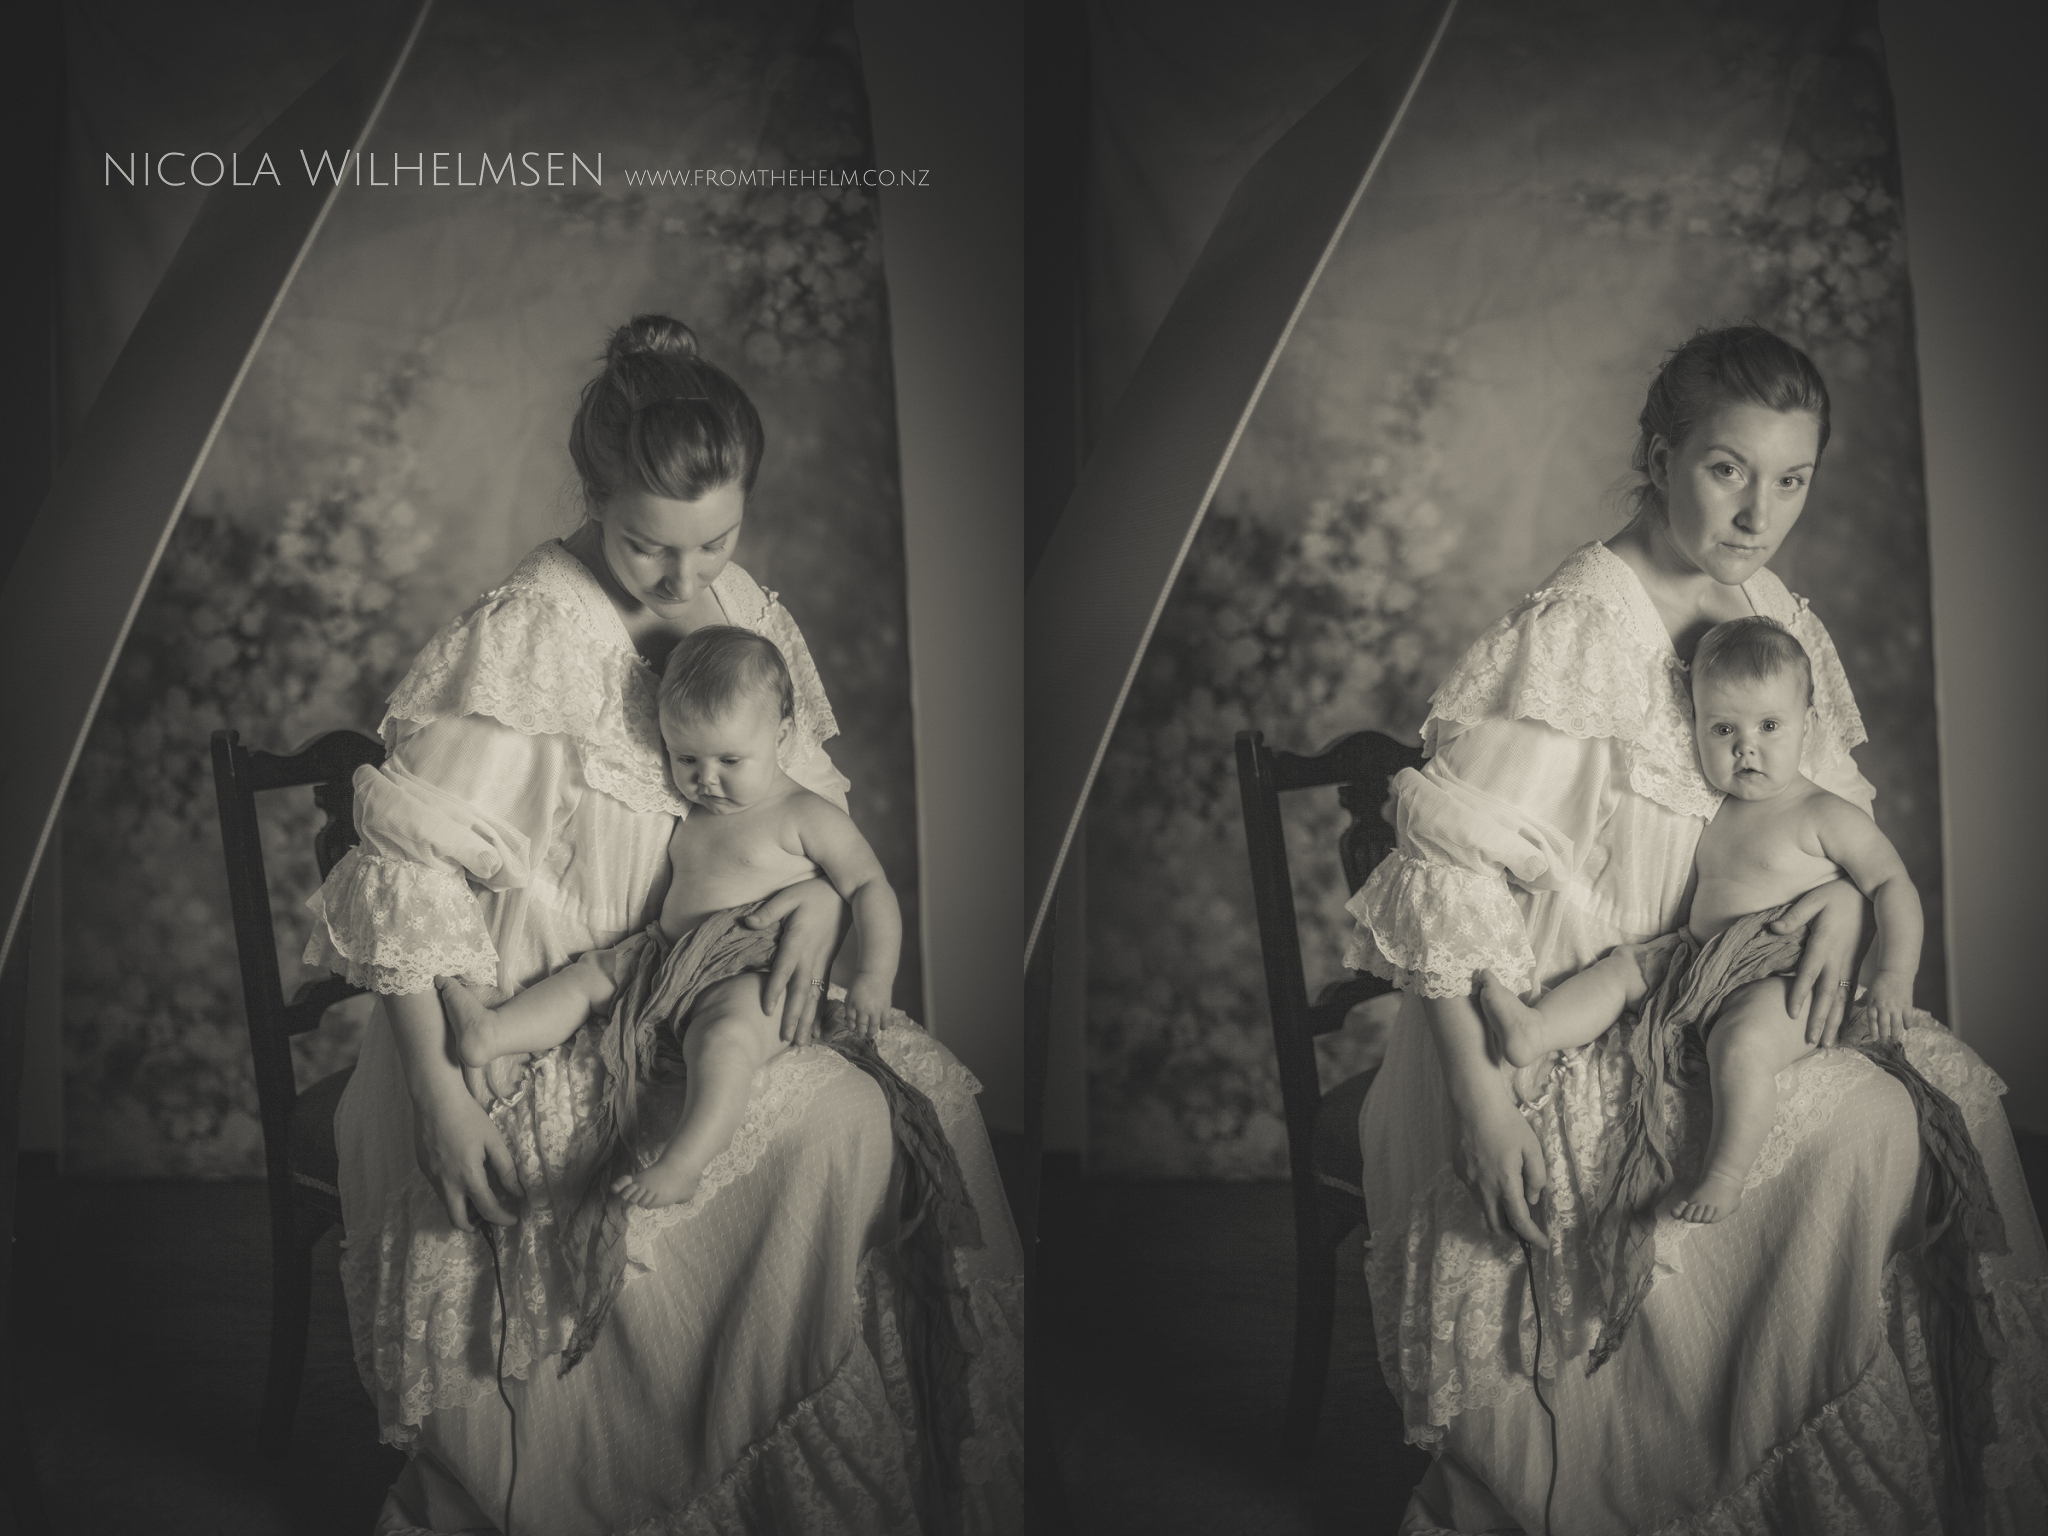 NicolaWilhelmsen_fromthehelm_breastfeeding_fineartphotography (4).jpg